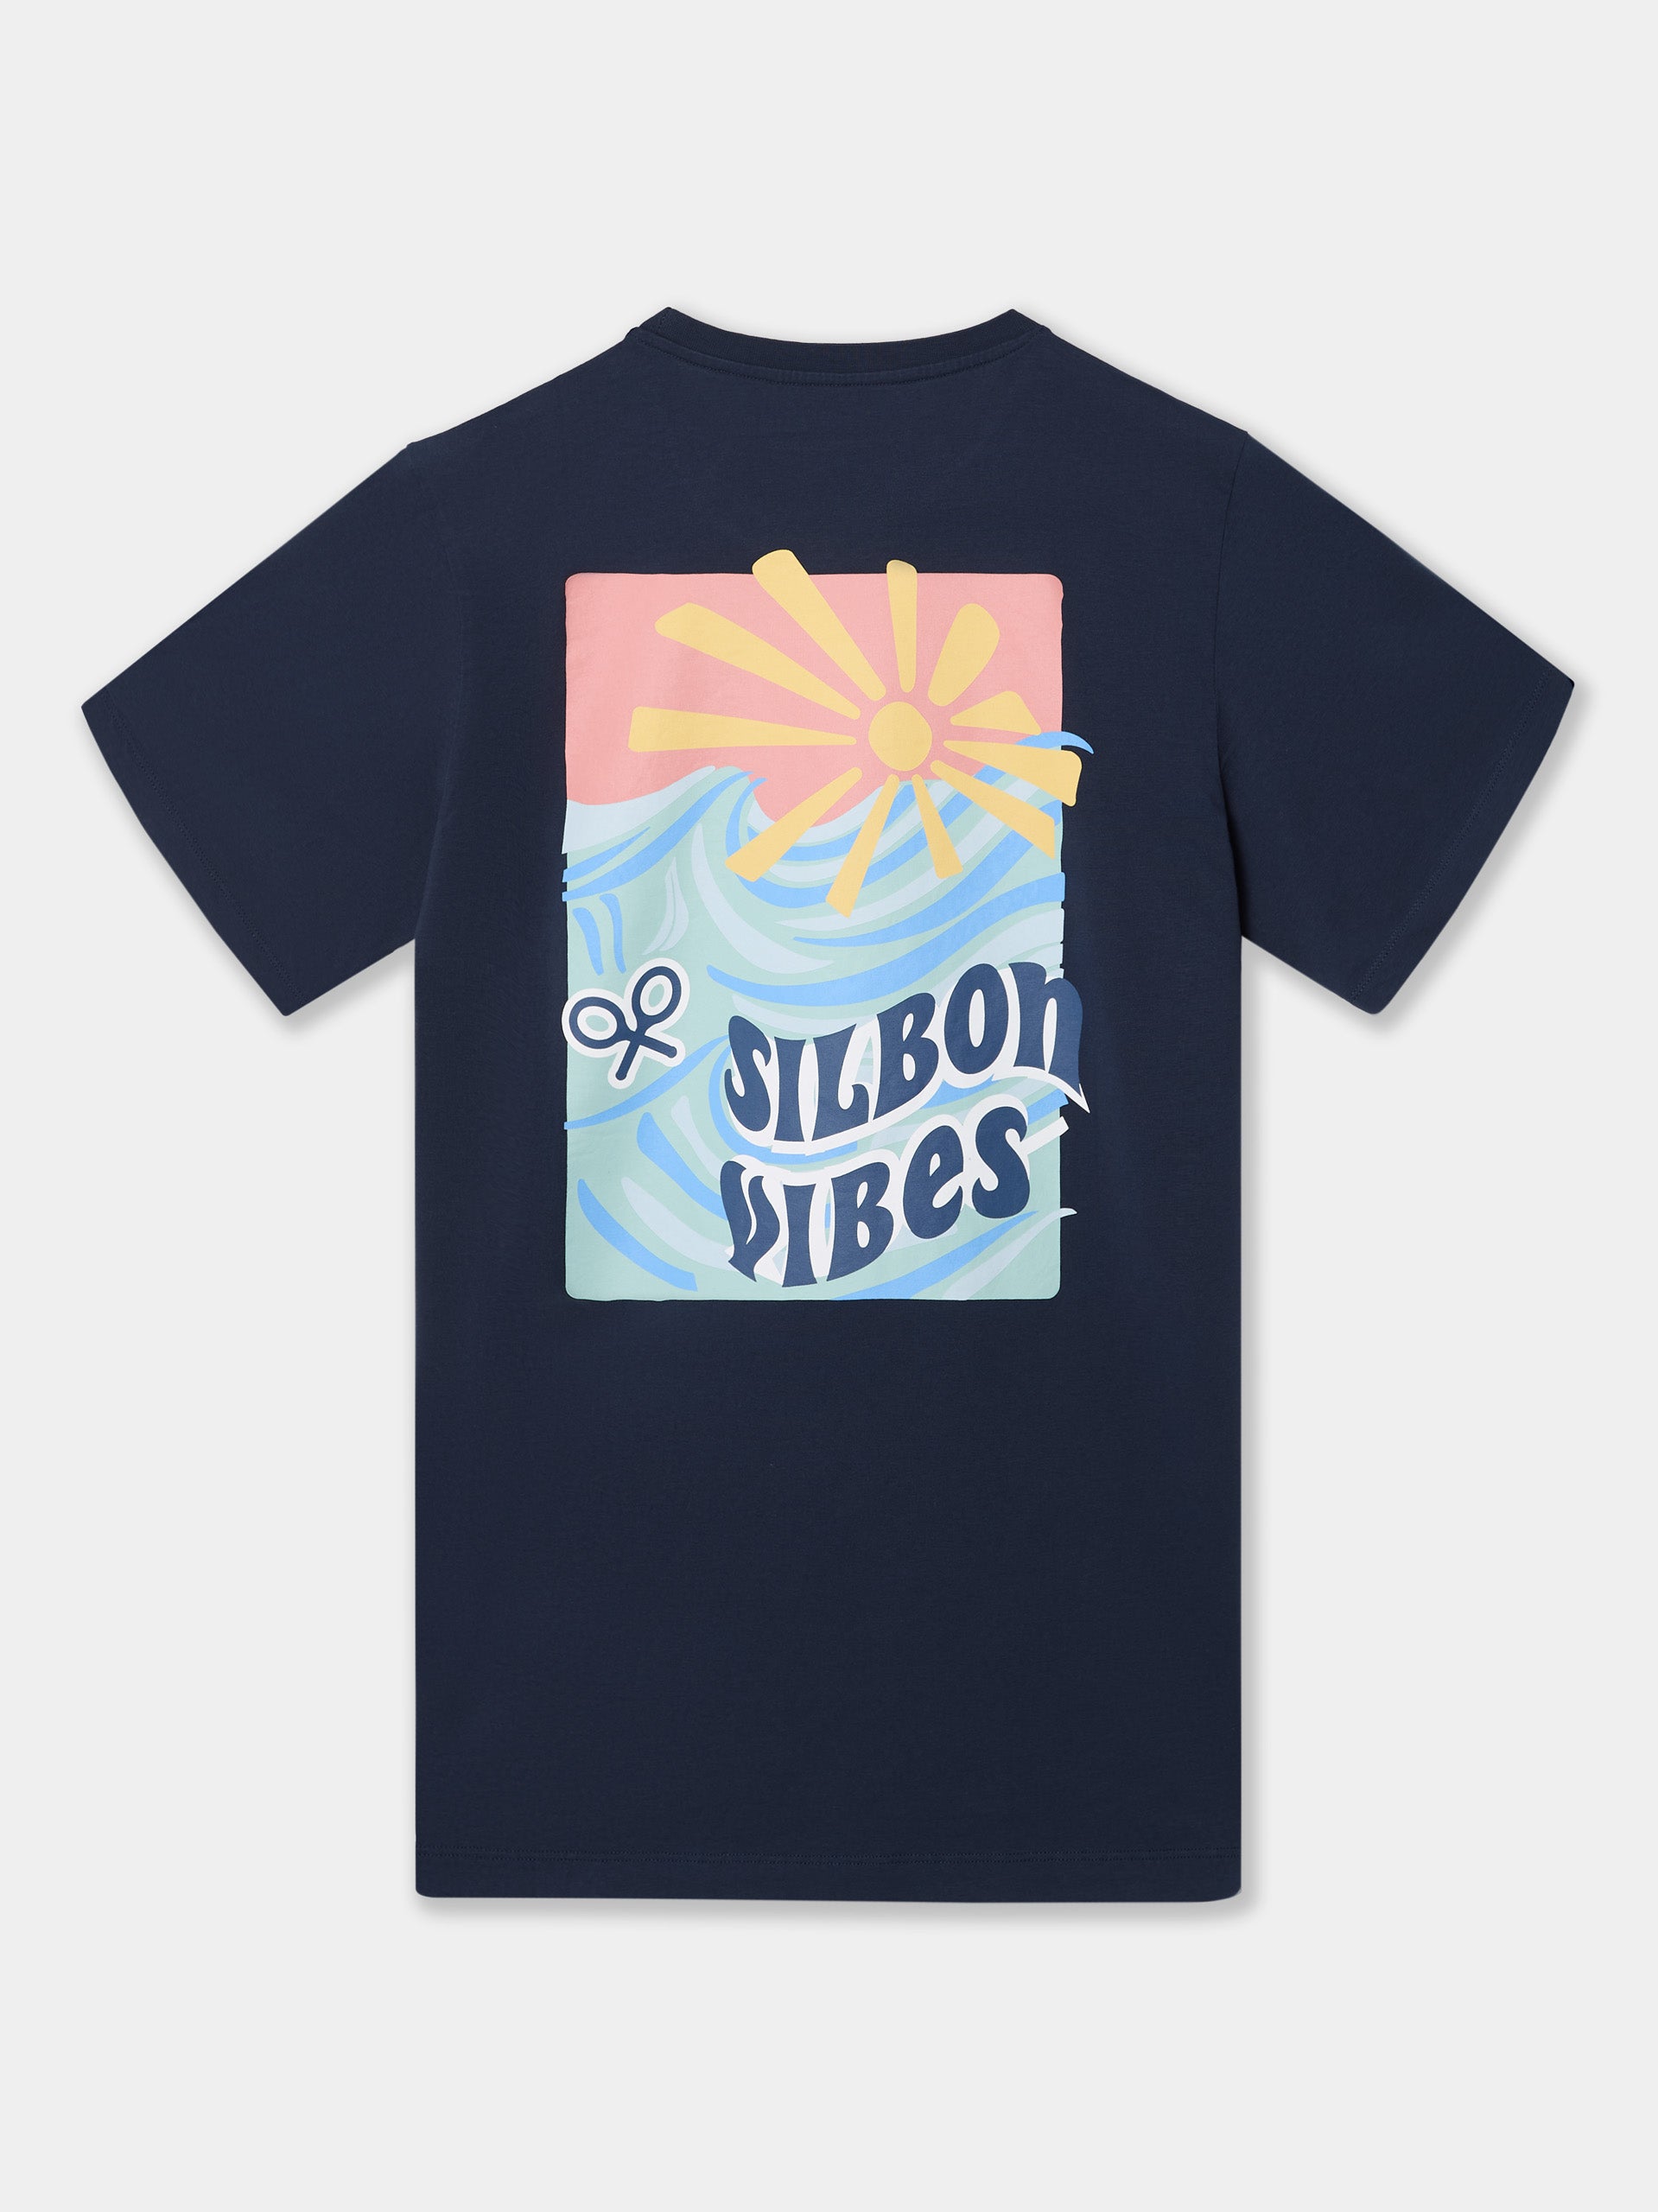 Camiseta silbon vibes azul marino